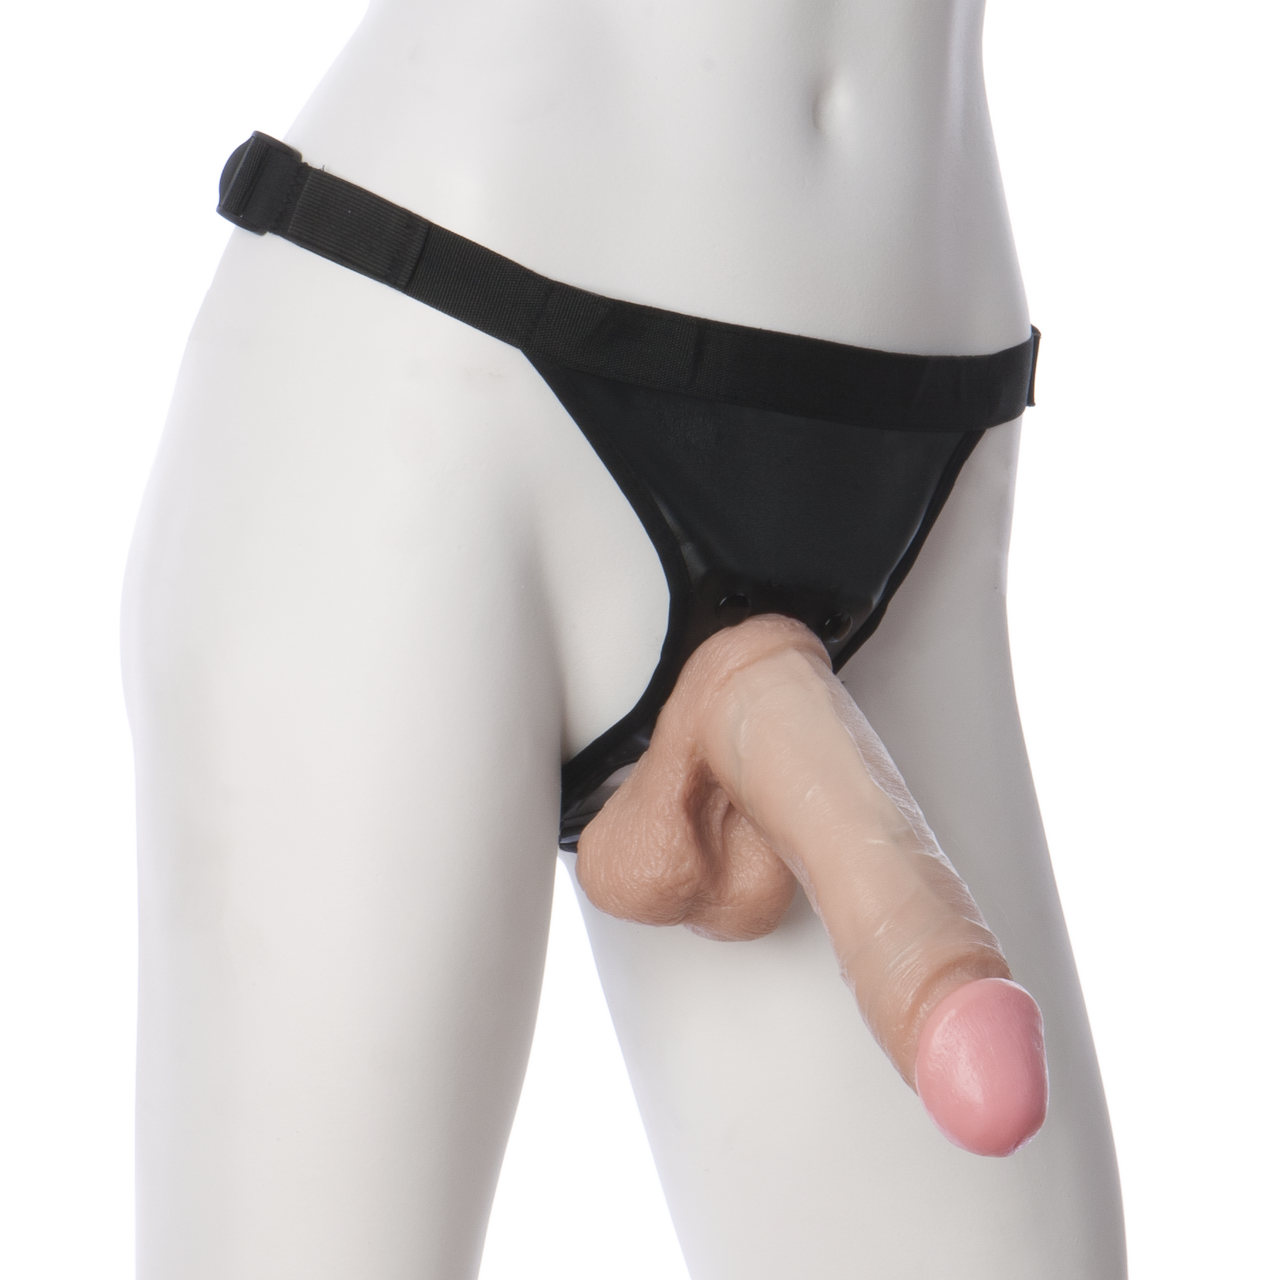 Buy Vac-U-Lock Set 8 inch Realistic Ultra Strap-On Dildo Best Sex Toys image